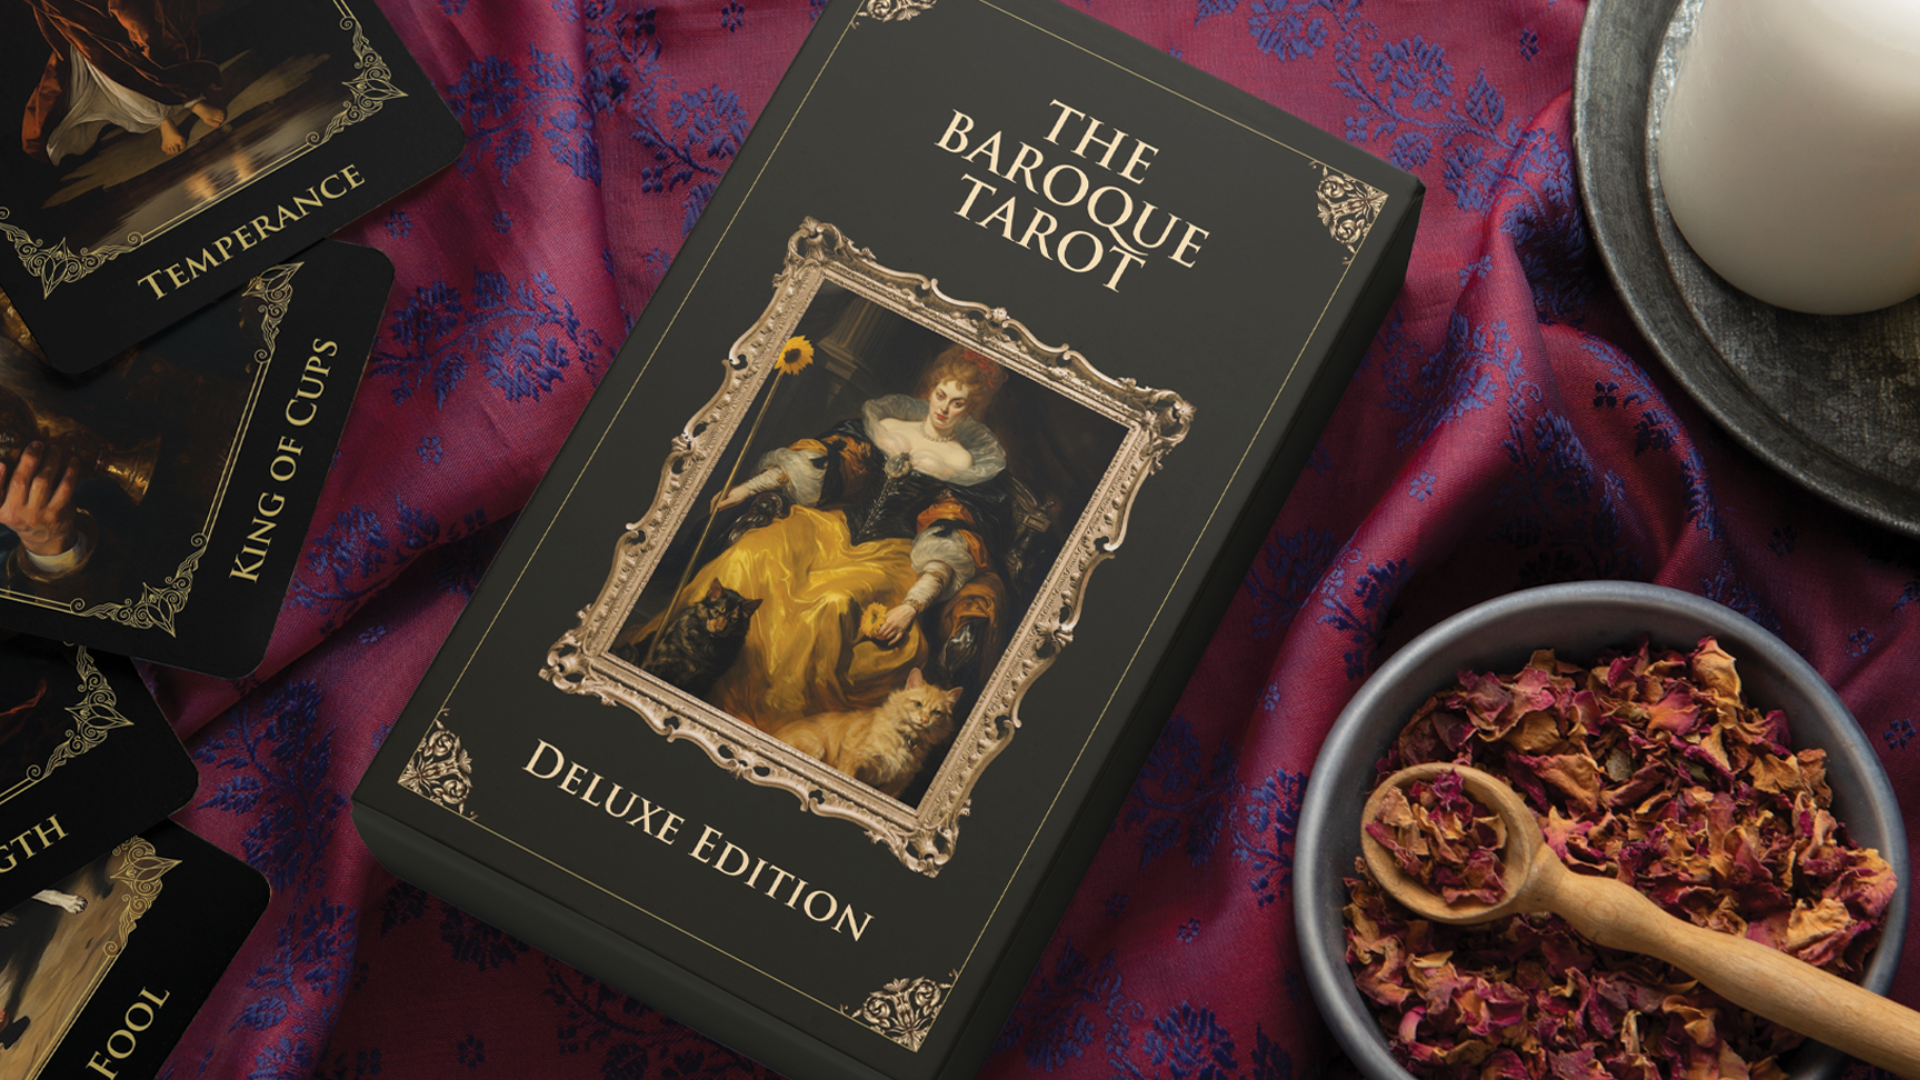 Baroque Tarot Launches The Deluxe Edition on Kickstarter - More Luxurious, More Artistic